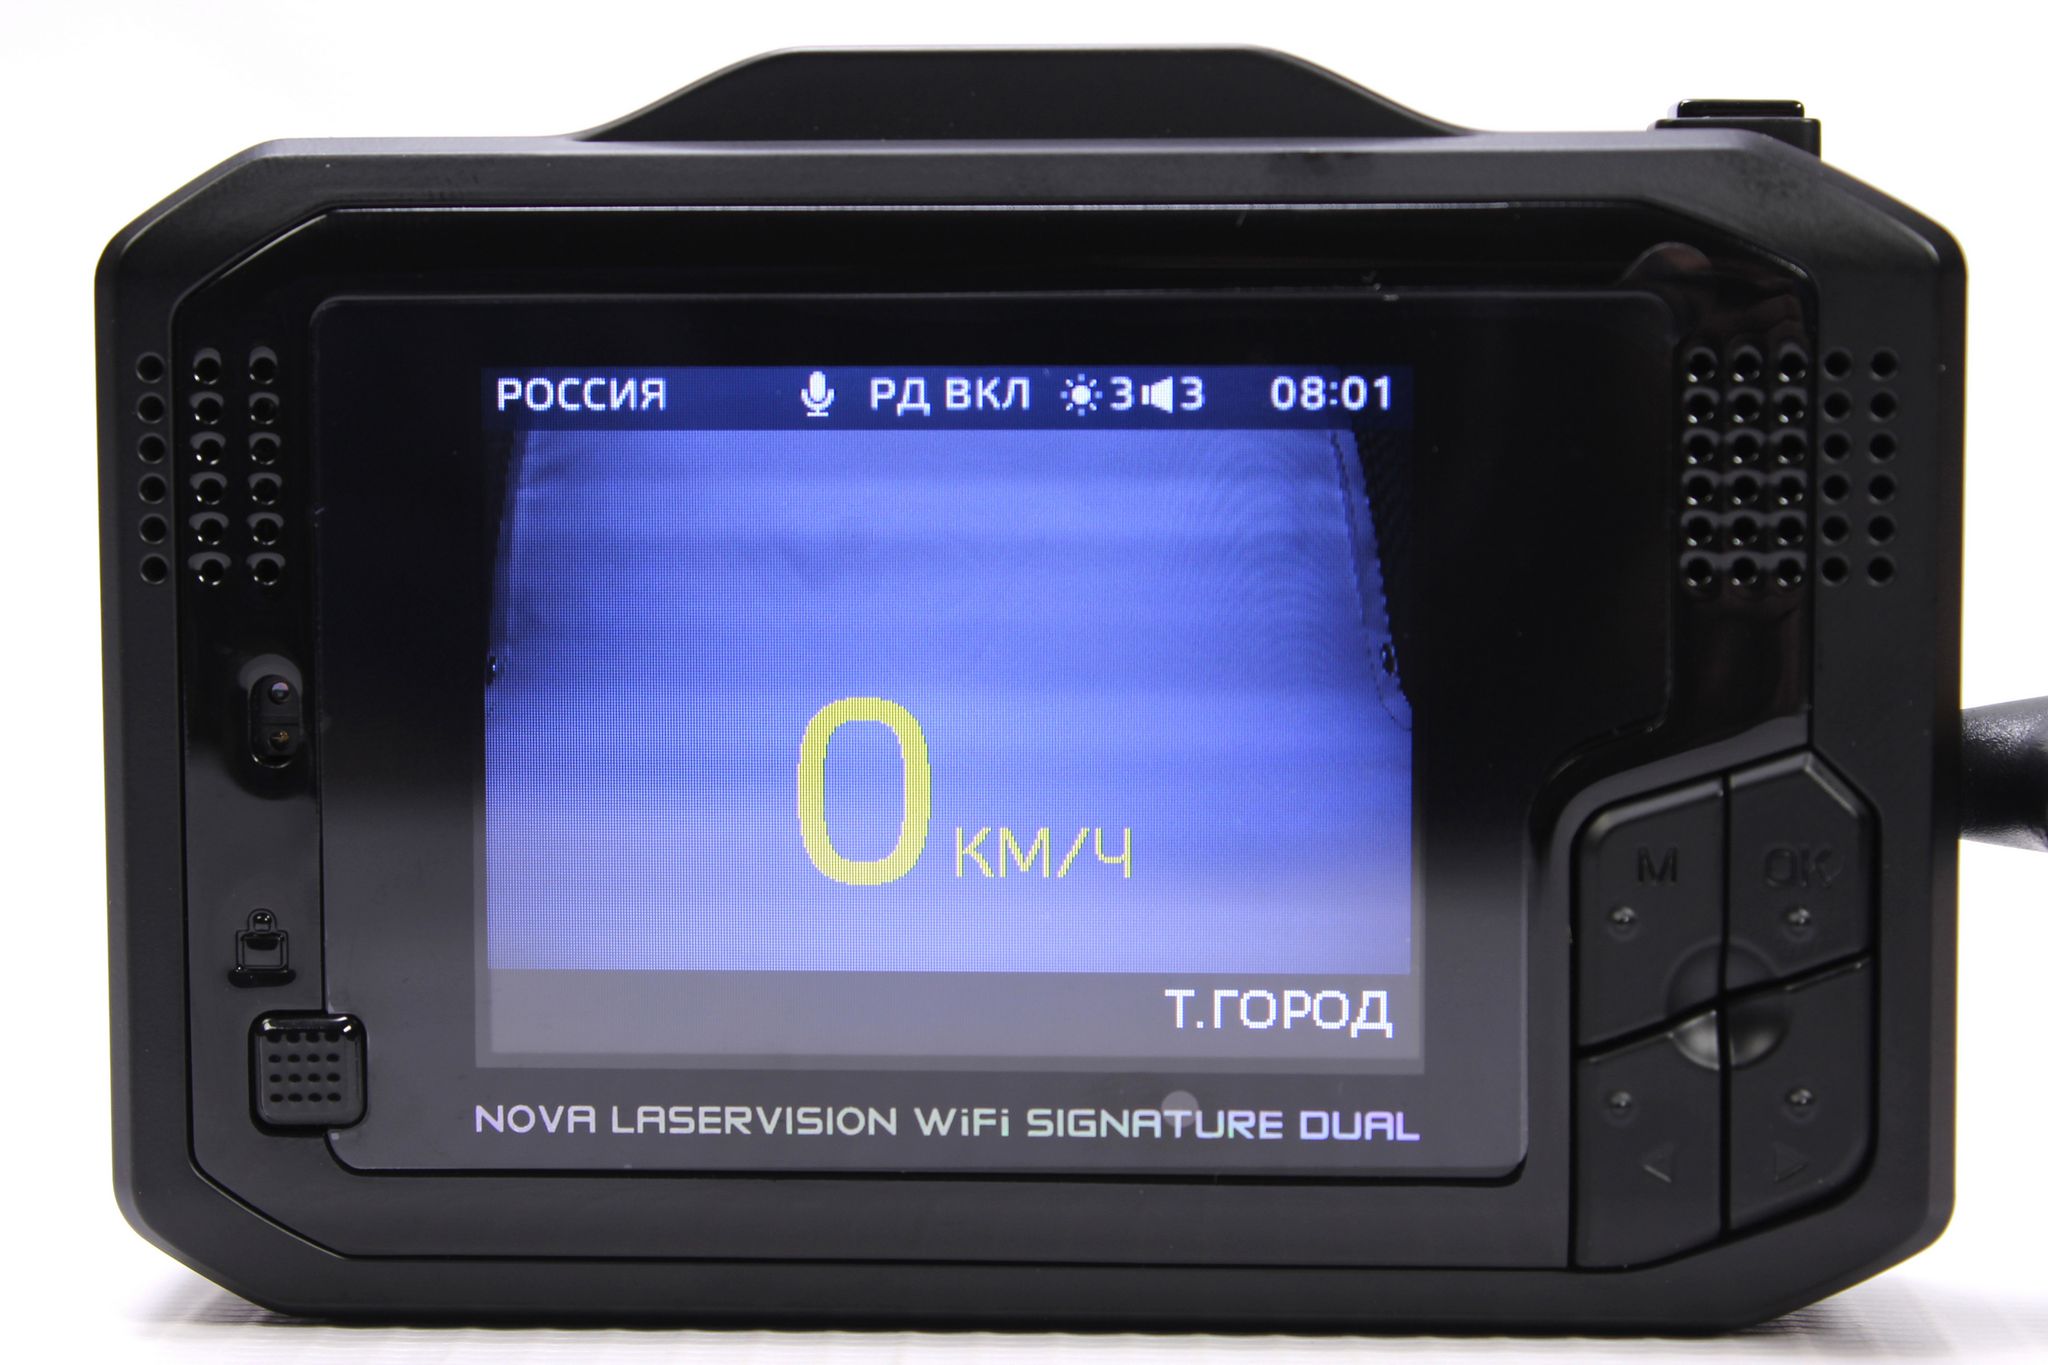 Видеорегистратор с радар-детектором IBOX EVO laservision WIFI Signature Dual. GPS навигатора с видеорегистратором Coyote 940 DVR Double.... ЖЛС навигатор видеорегистратором 9 дюймов. Комбоустройства для авто Eplutus Signature. Ibox nova wifi signature